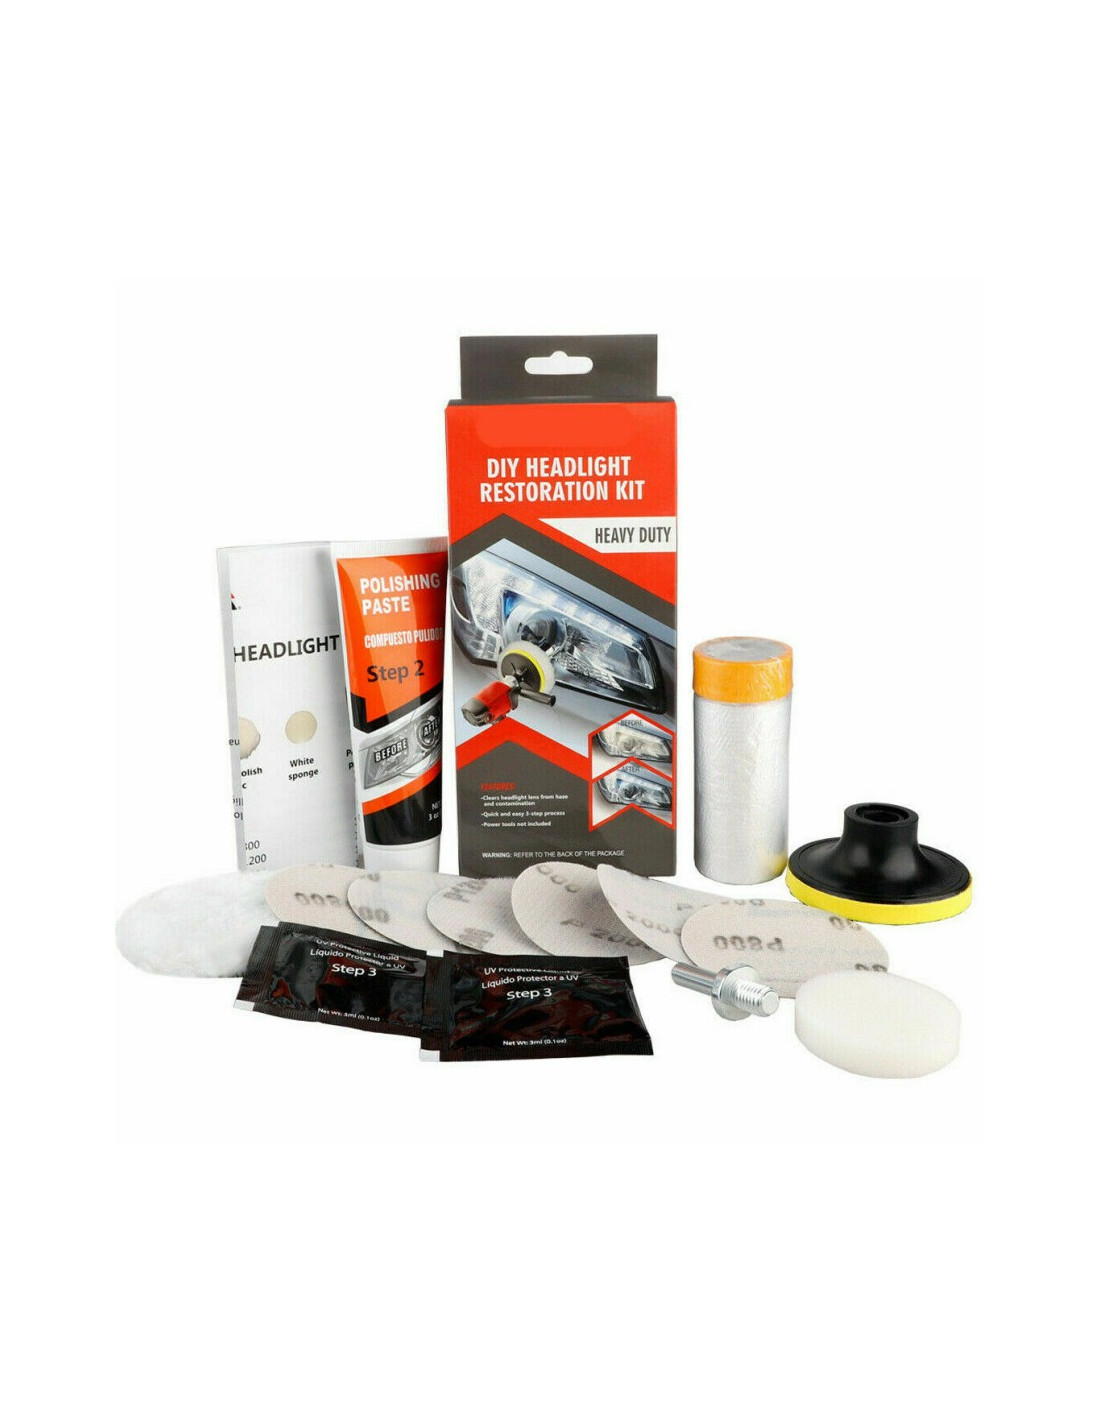 Visbella Automotive Headlight Polish Restoration Kit Headlight